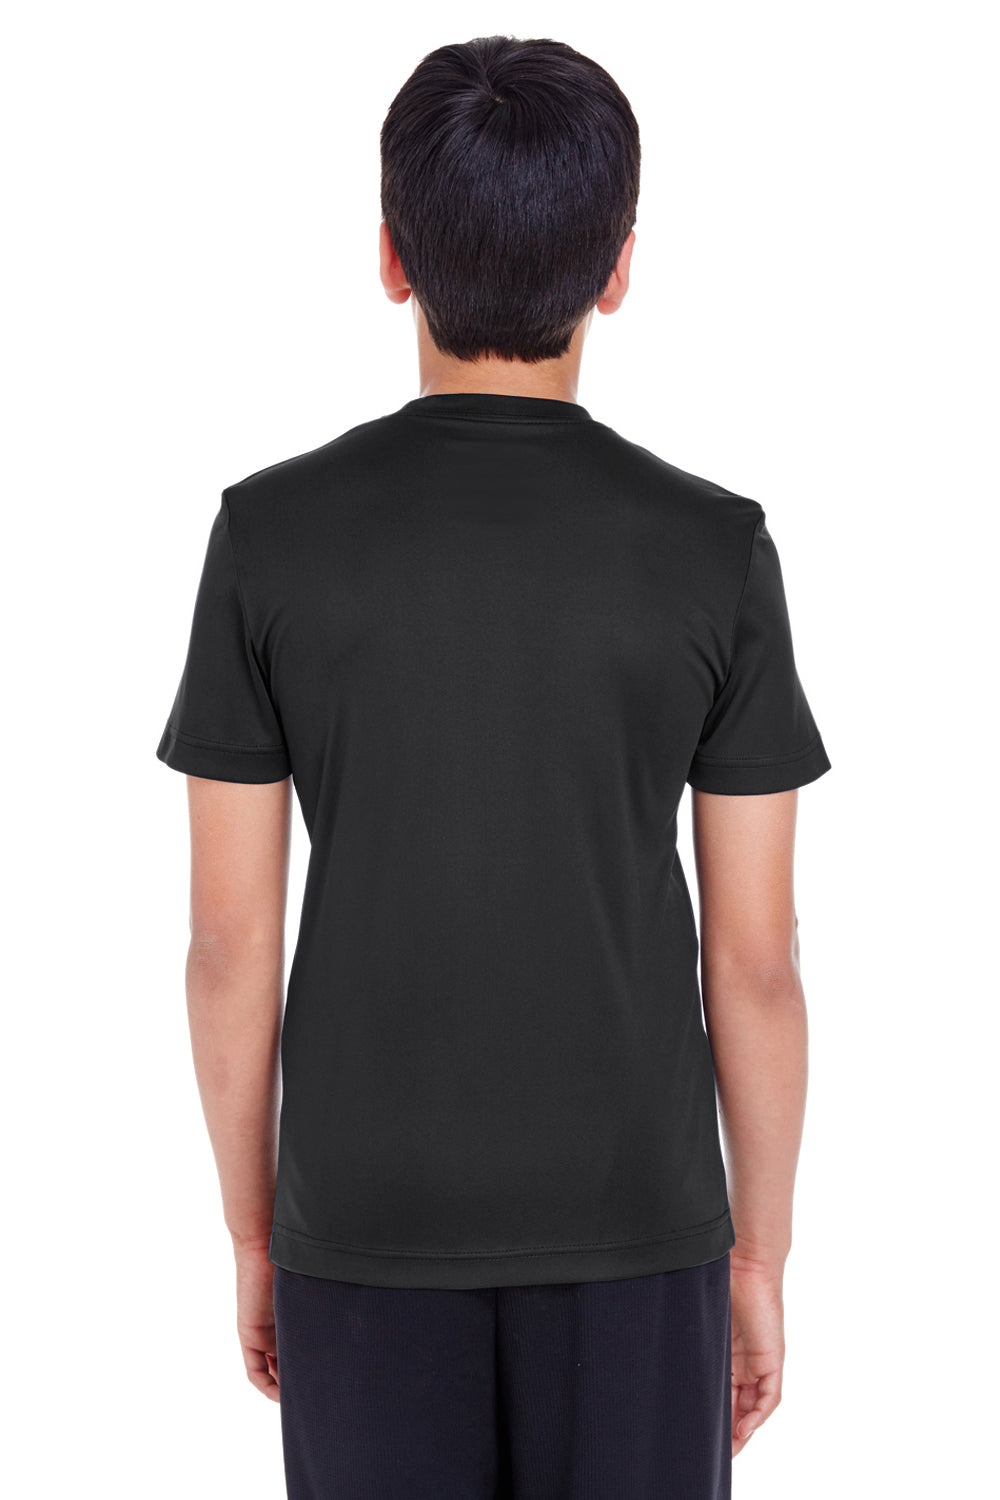 Team 365 TT11Y Youth Zone Performance Moisture Wicking Short Sleeve Crewneck T-Shirt Black Back